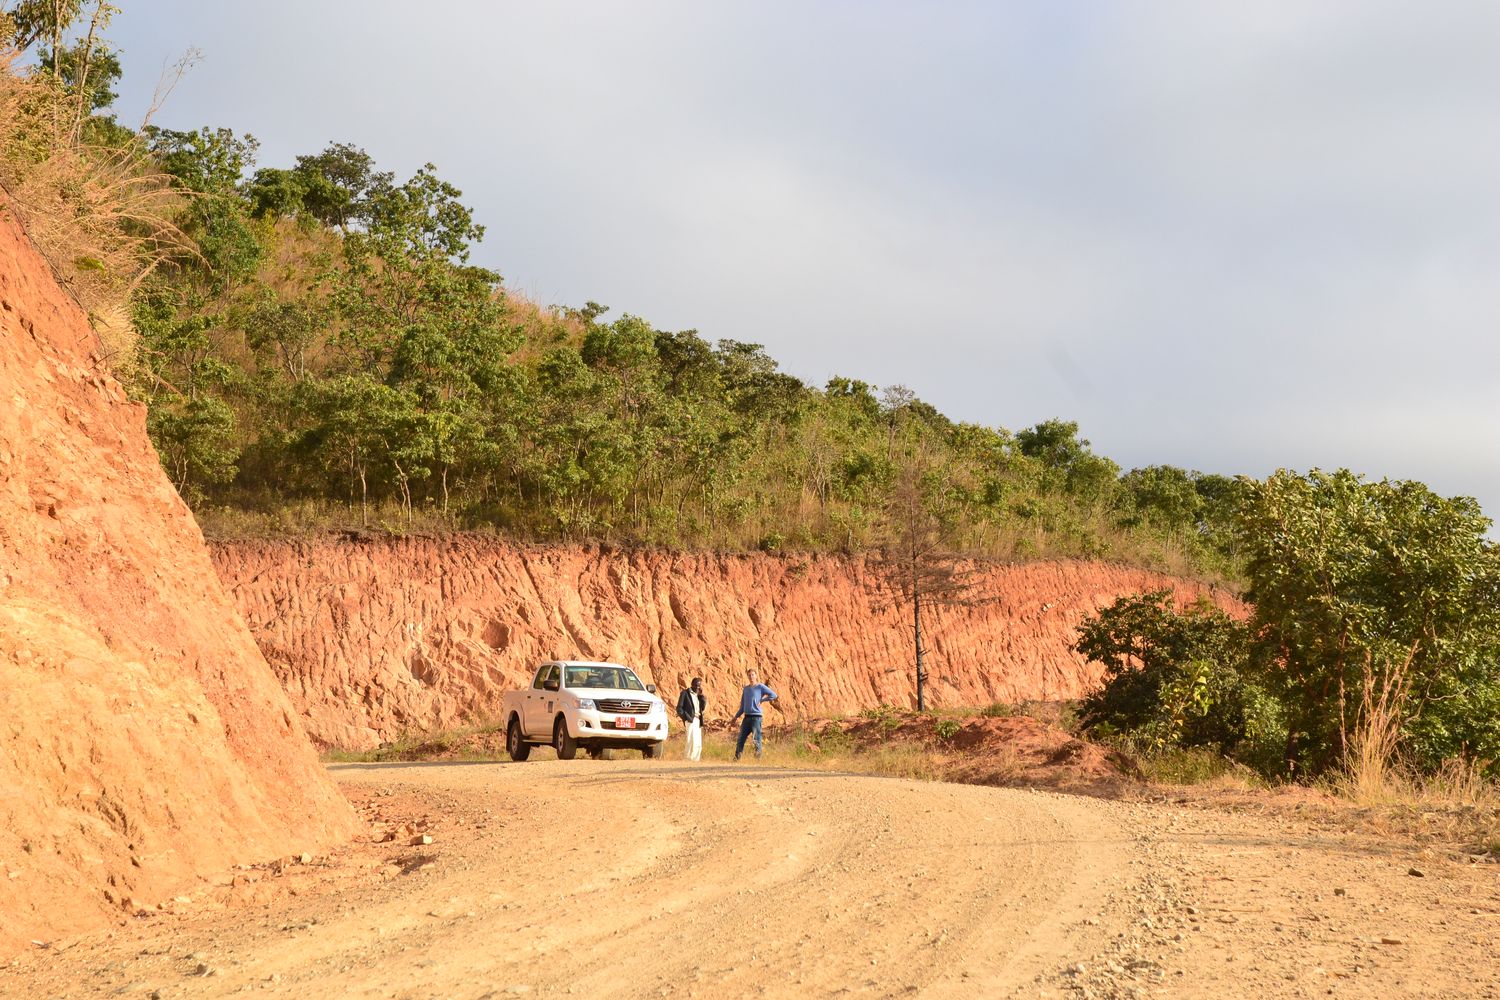 The road leading to Lugarawa village